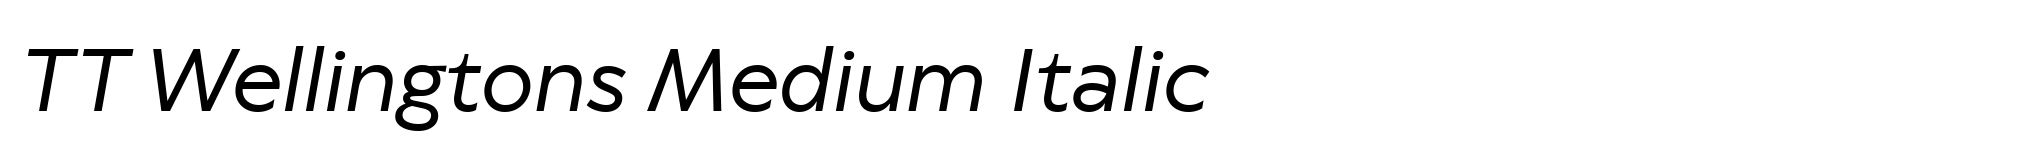 TT Wellingtons Medium Italic image